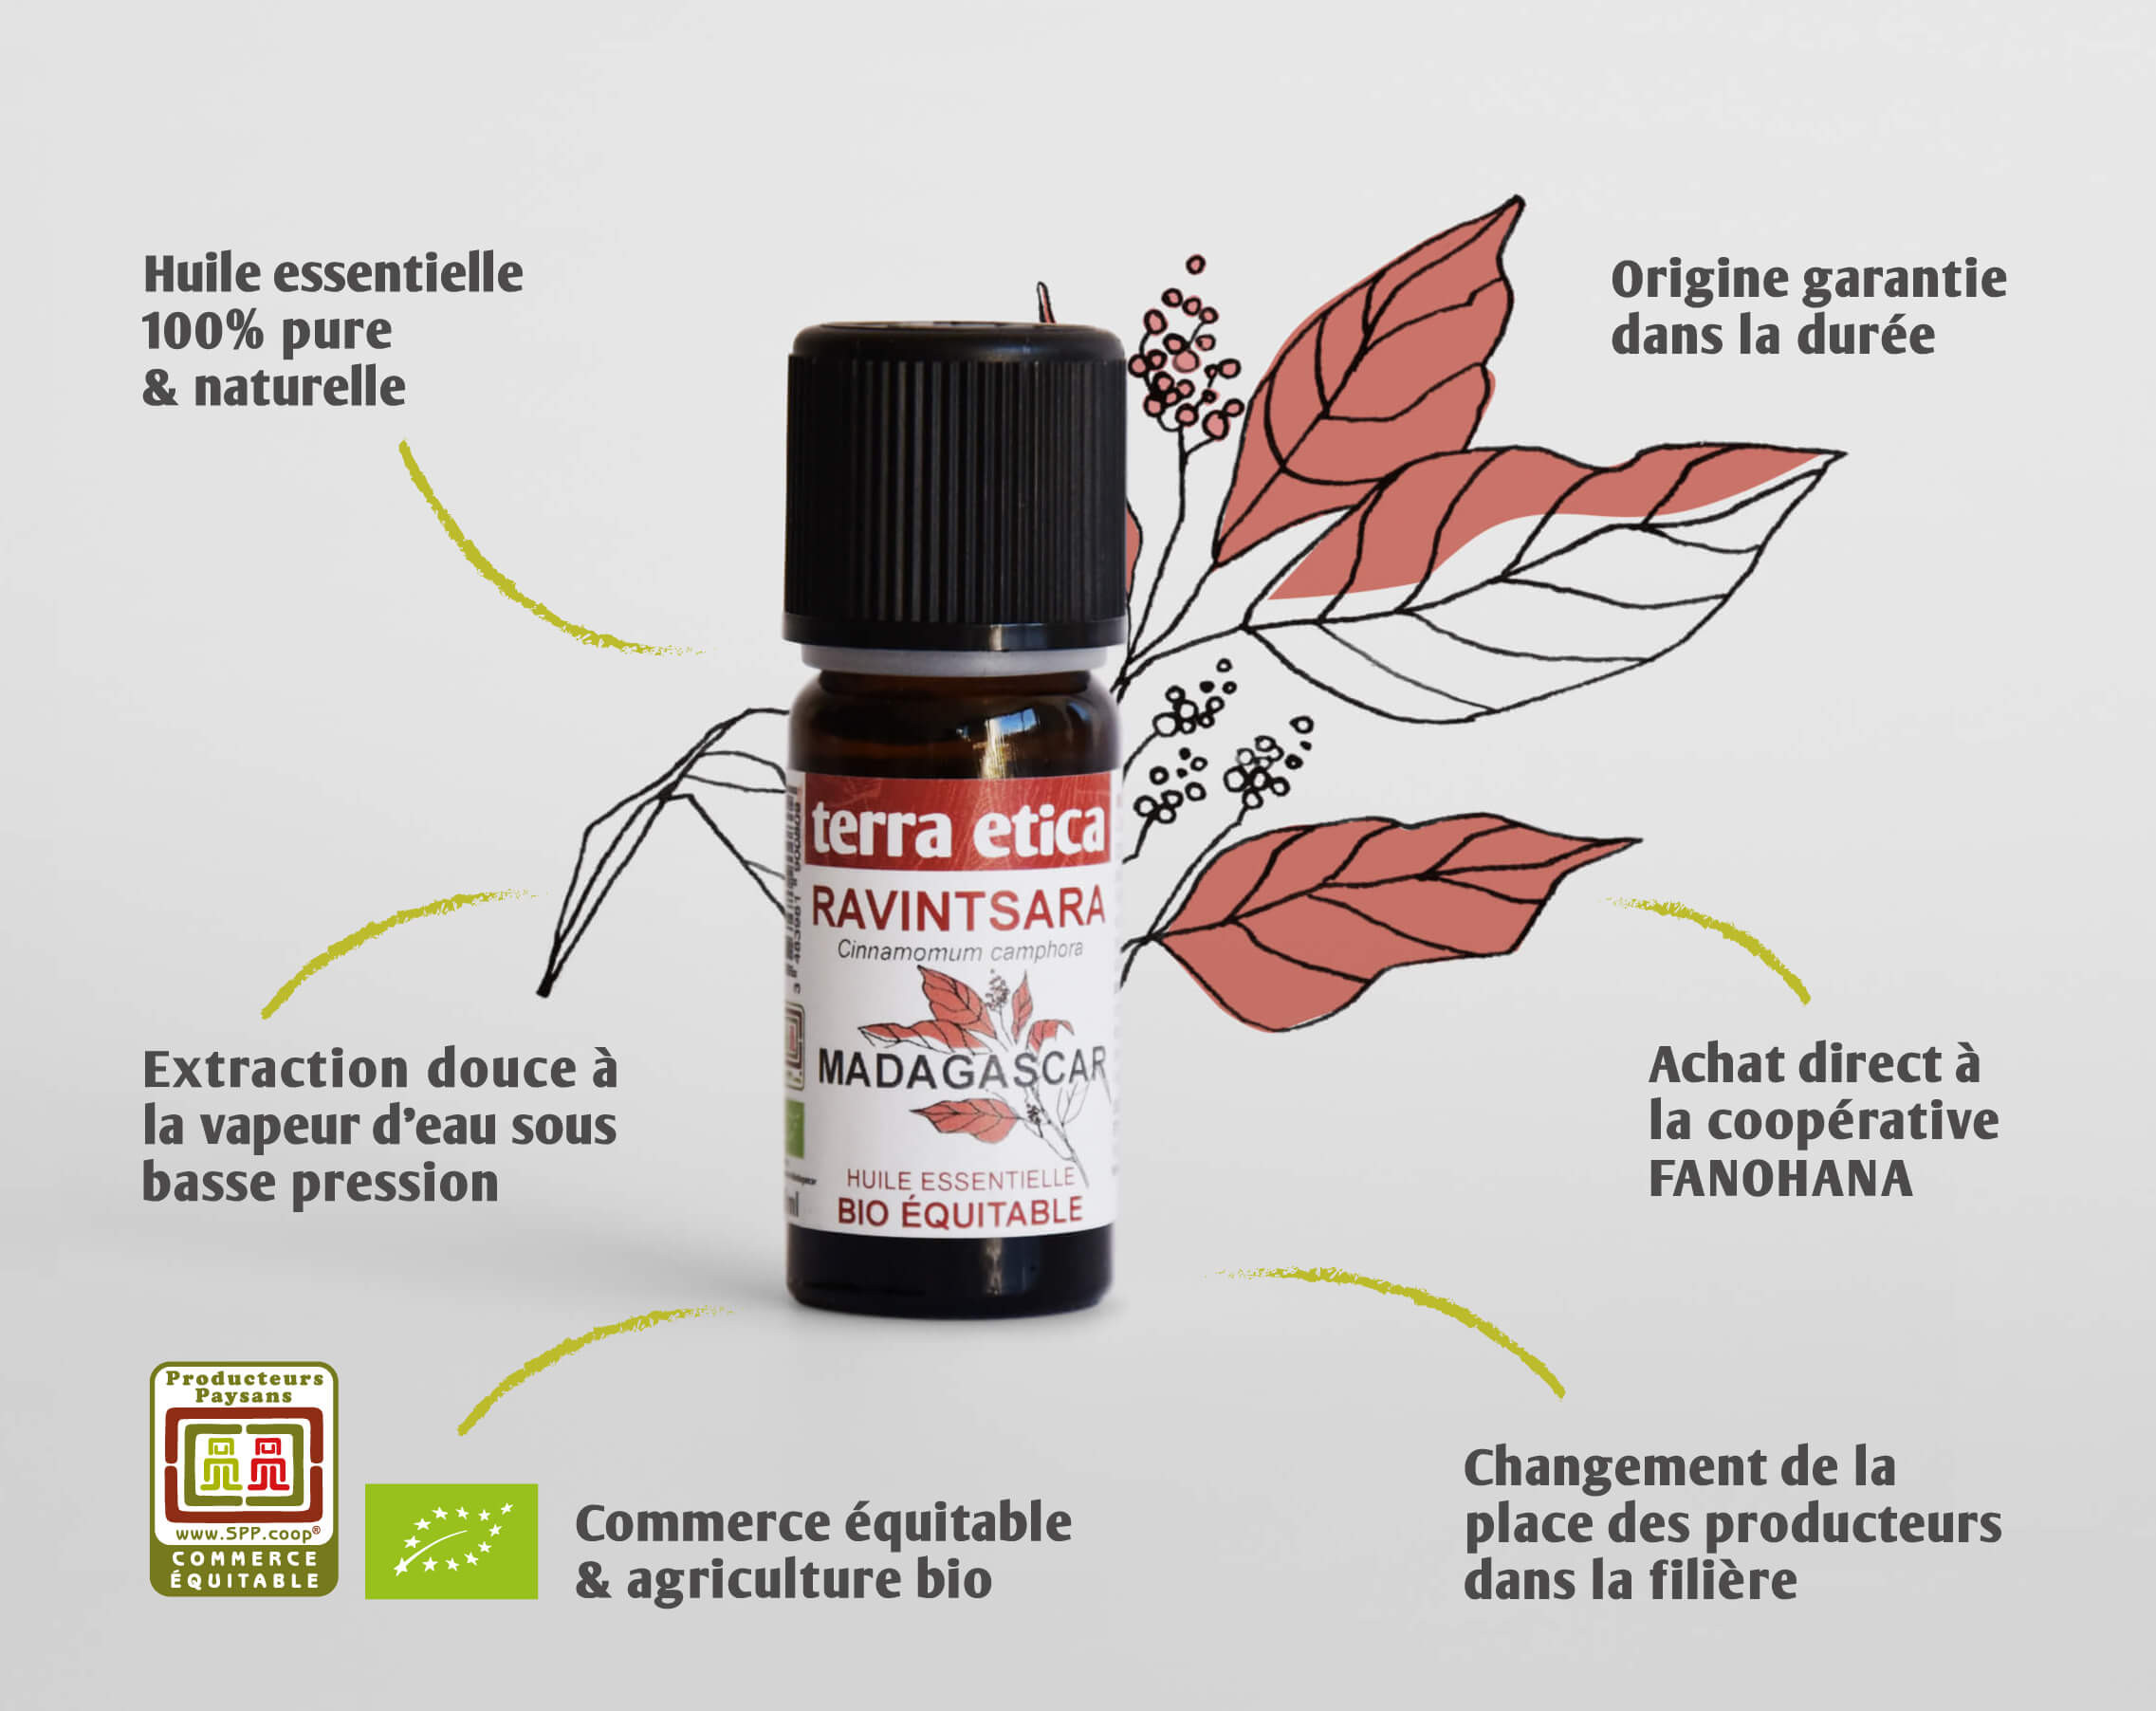 https://www.cafemichel.fr/648/terra-etica-huile-essentielle-ravintsara-madagascar-biologique-equitable.jpg